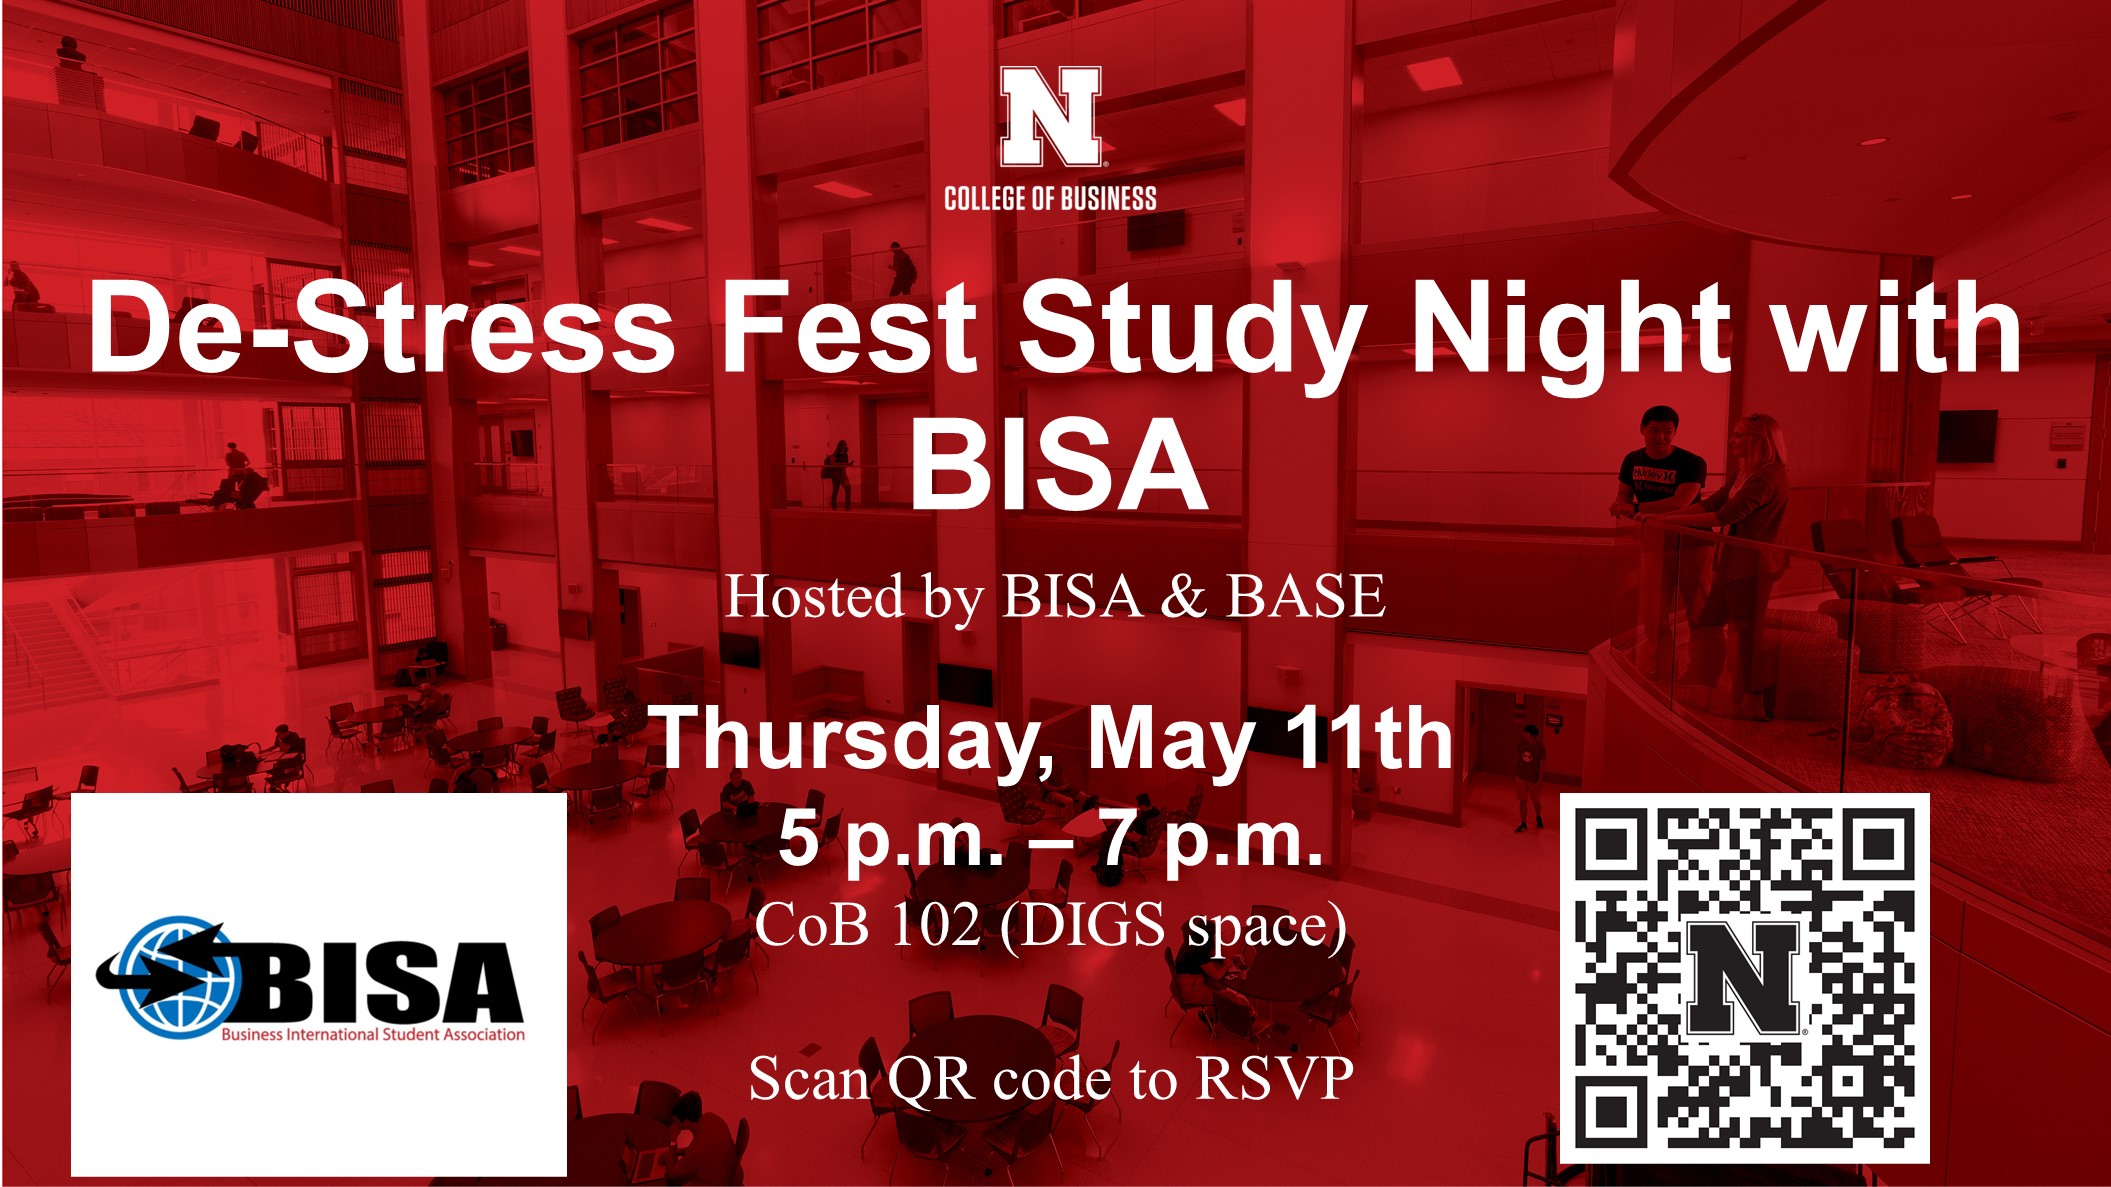 De-Stress Fest Study Night with BISA